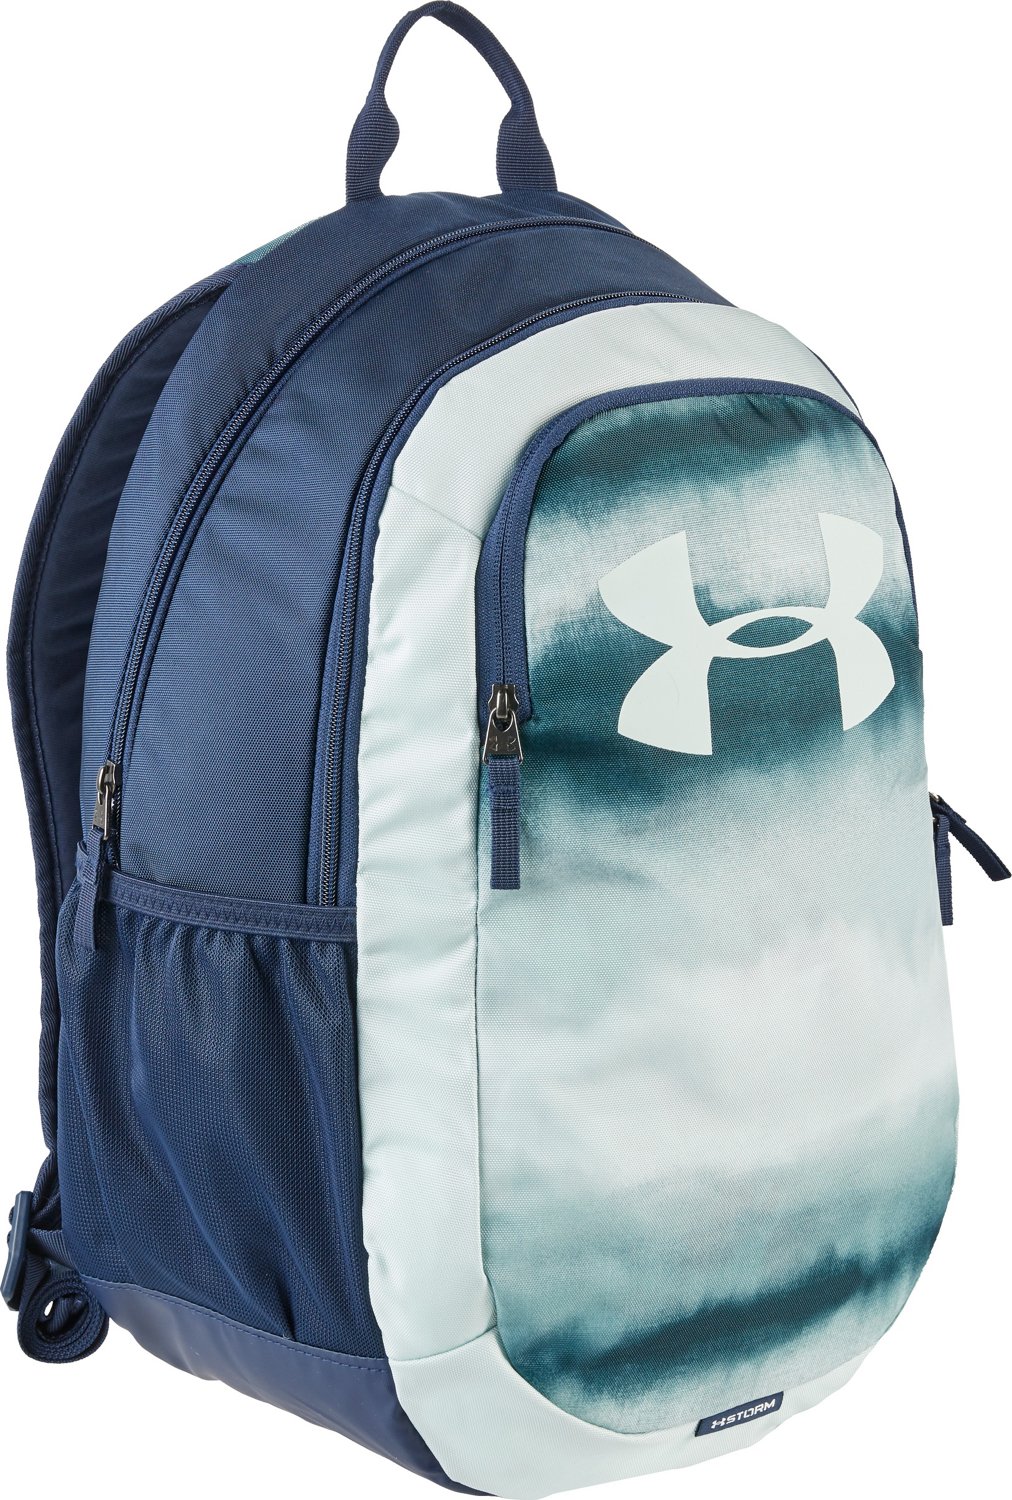 under armour backpack light blue